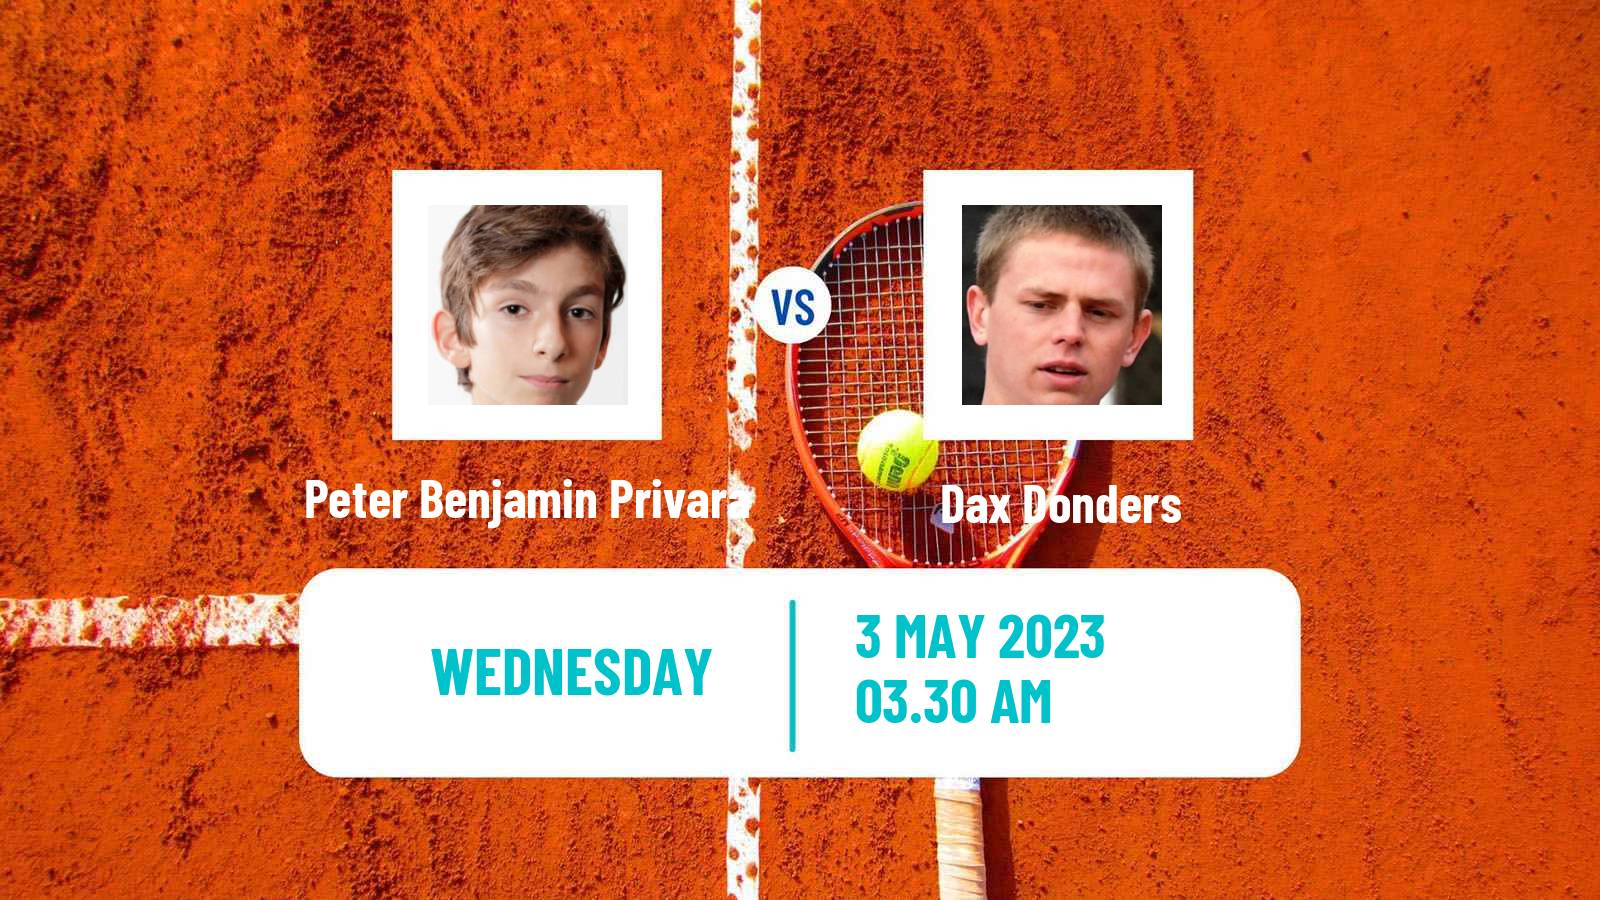 Tennis ITF Tournaments Peter Benjamin Privara - Dax Donders